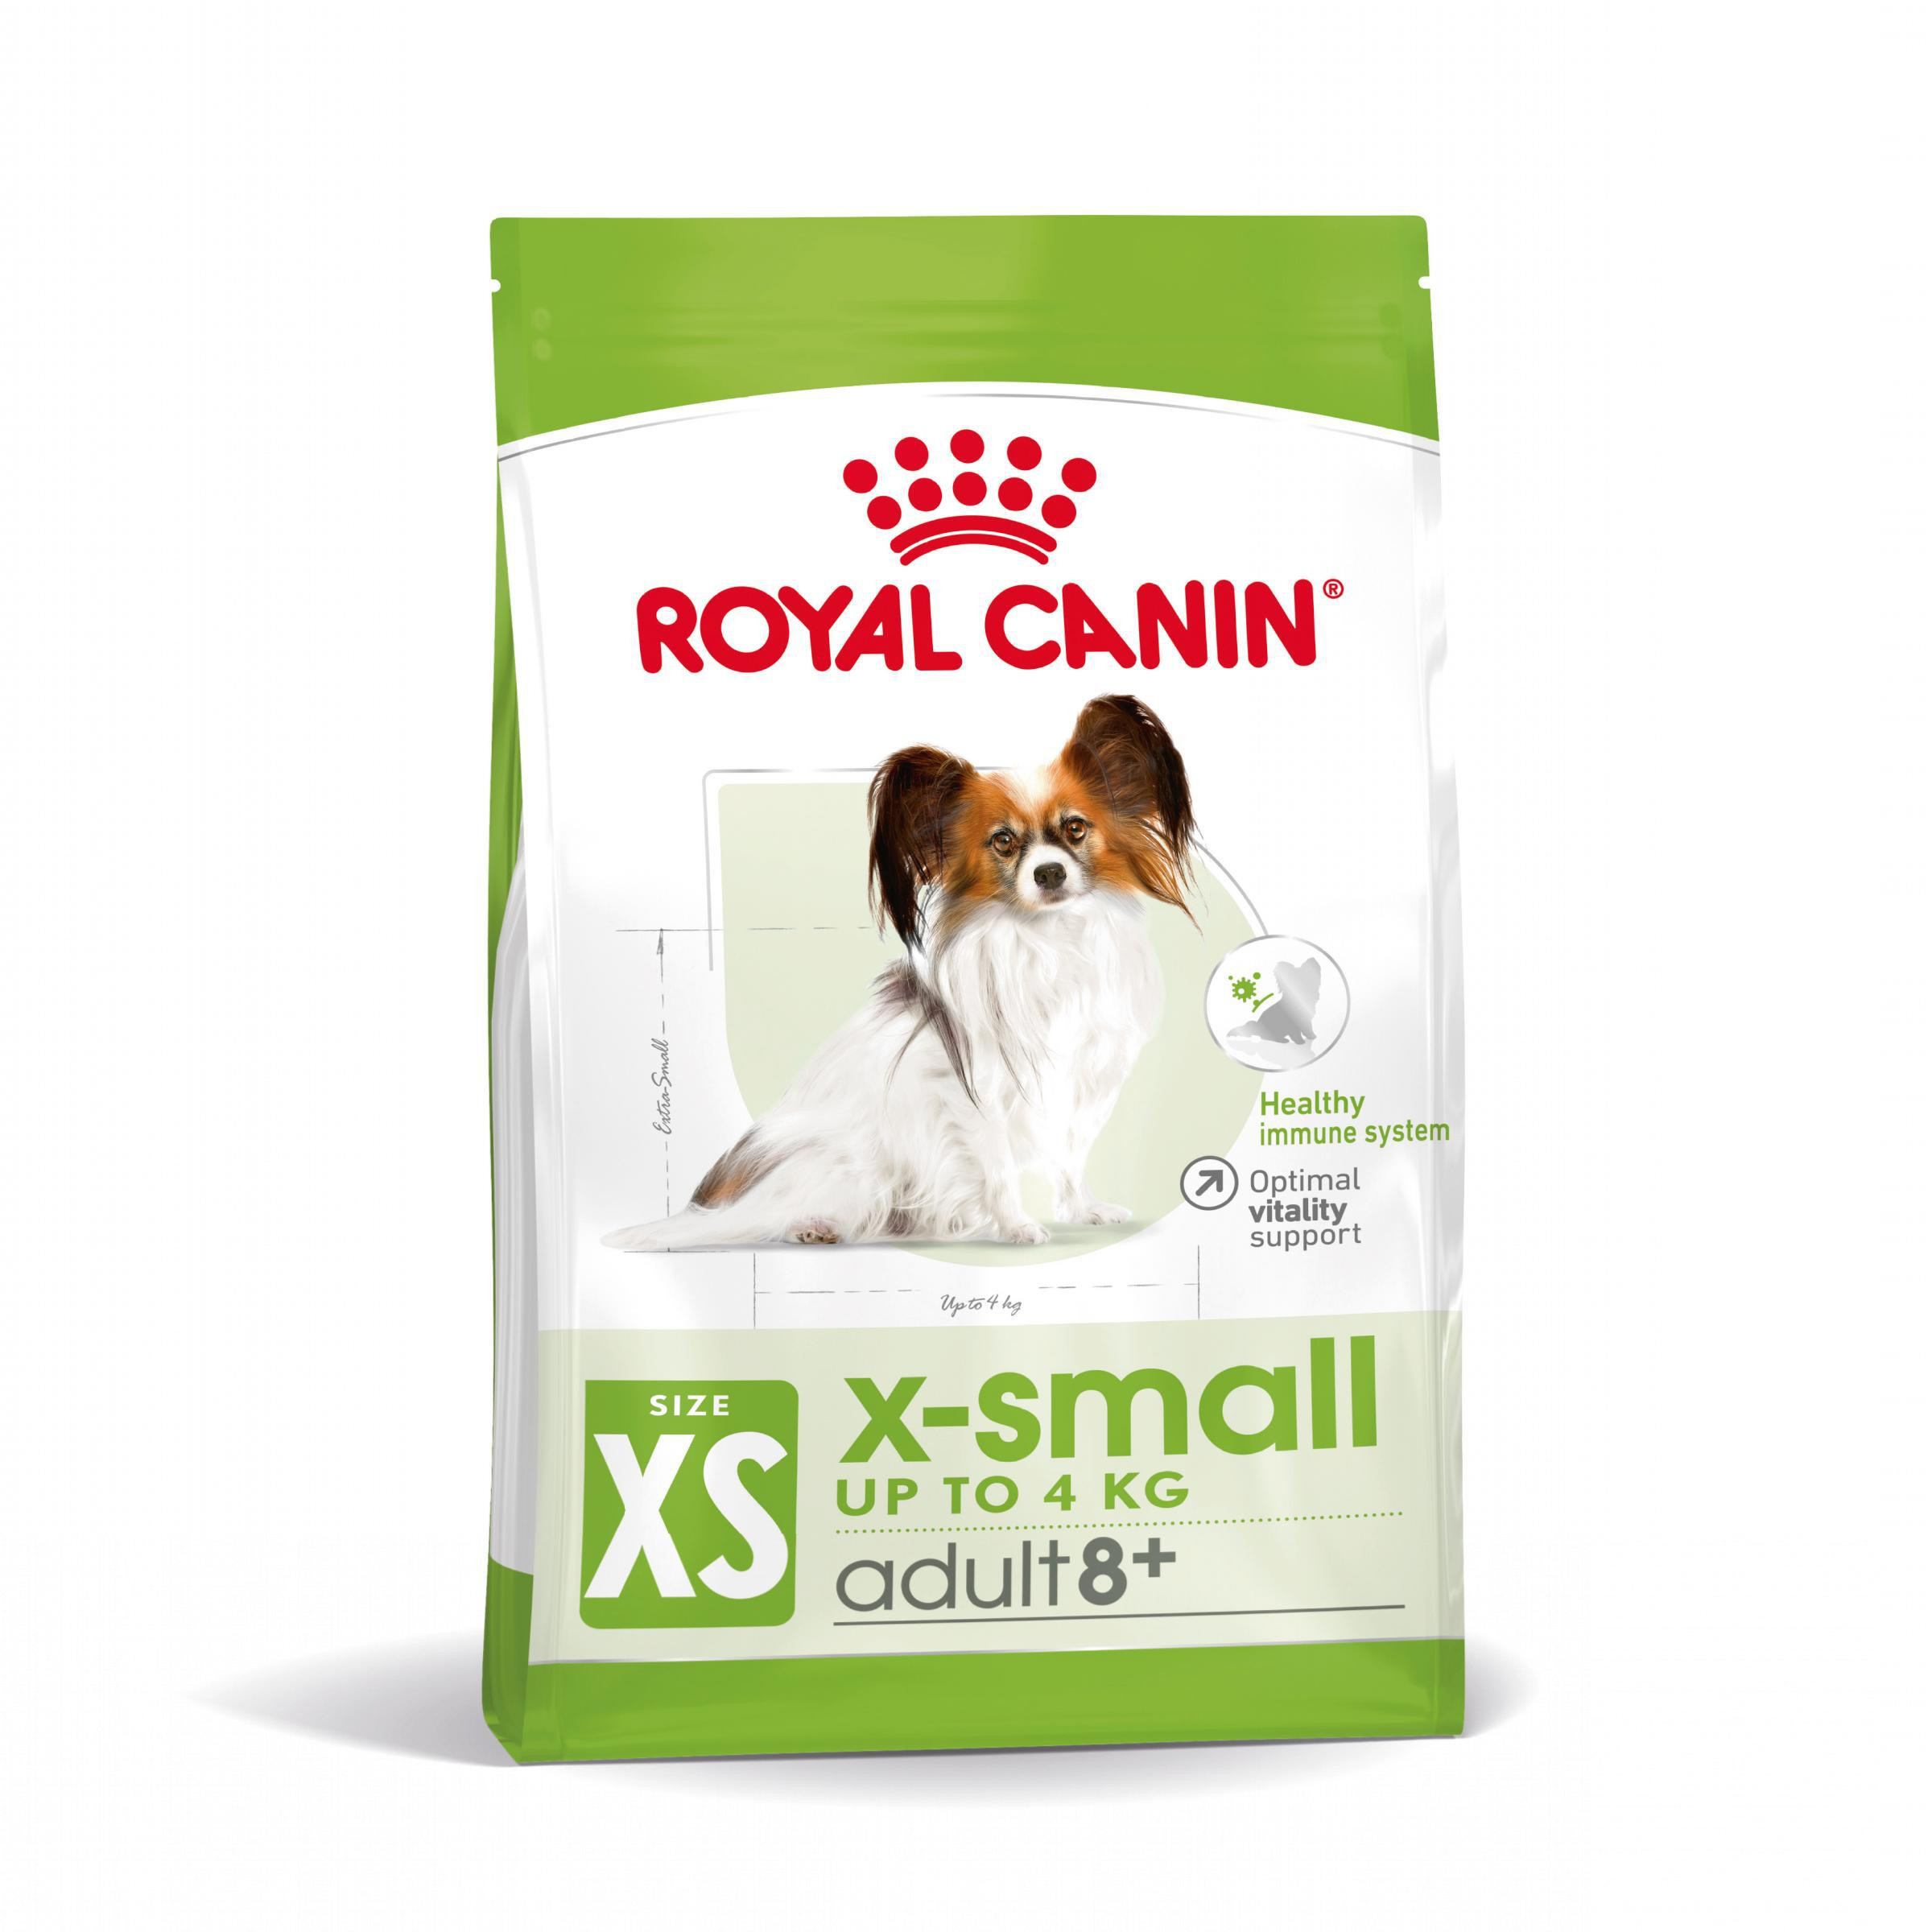 Royal Canin X-Small Adult 8+ hundfoder